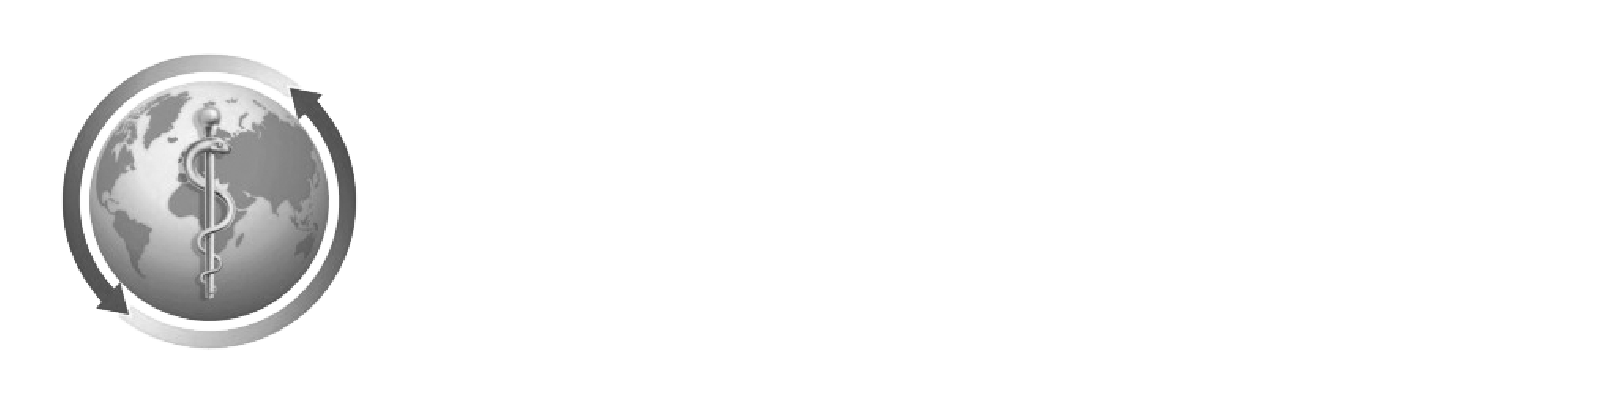 Insignia Learning_Insignia logo white